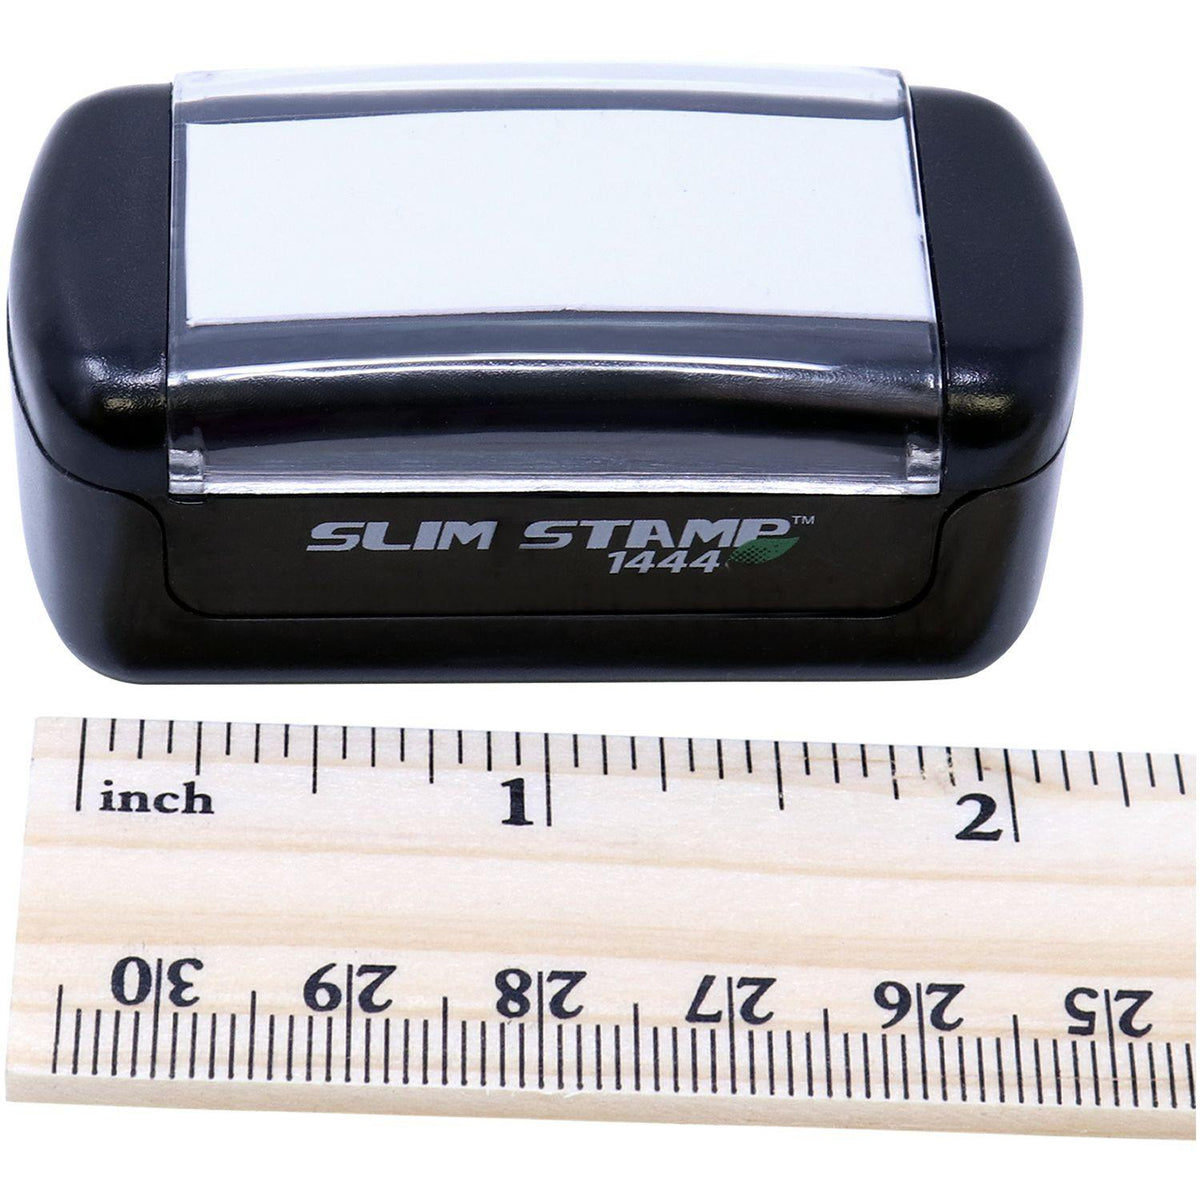 Measurement Slim Pre-Inked Hooo does this belong to Stamp with Ruler